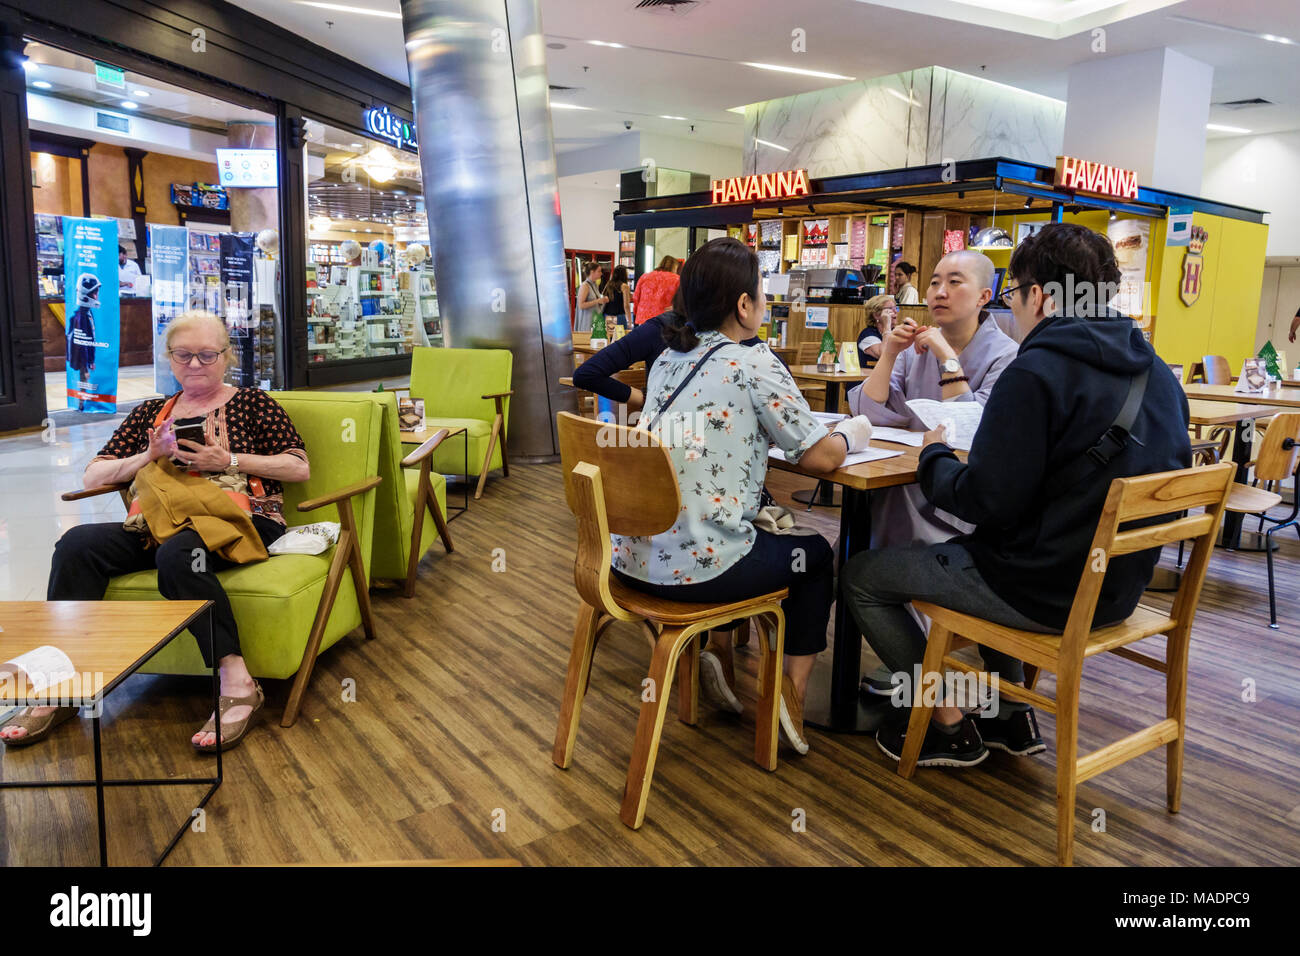 Buenos Aires Argentina,Recoleta mall,interior inside,Havanna,cafe,table,Asian Asians ethnic immigrant immigrants minority,family families parent paren Stock Photo